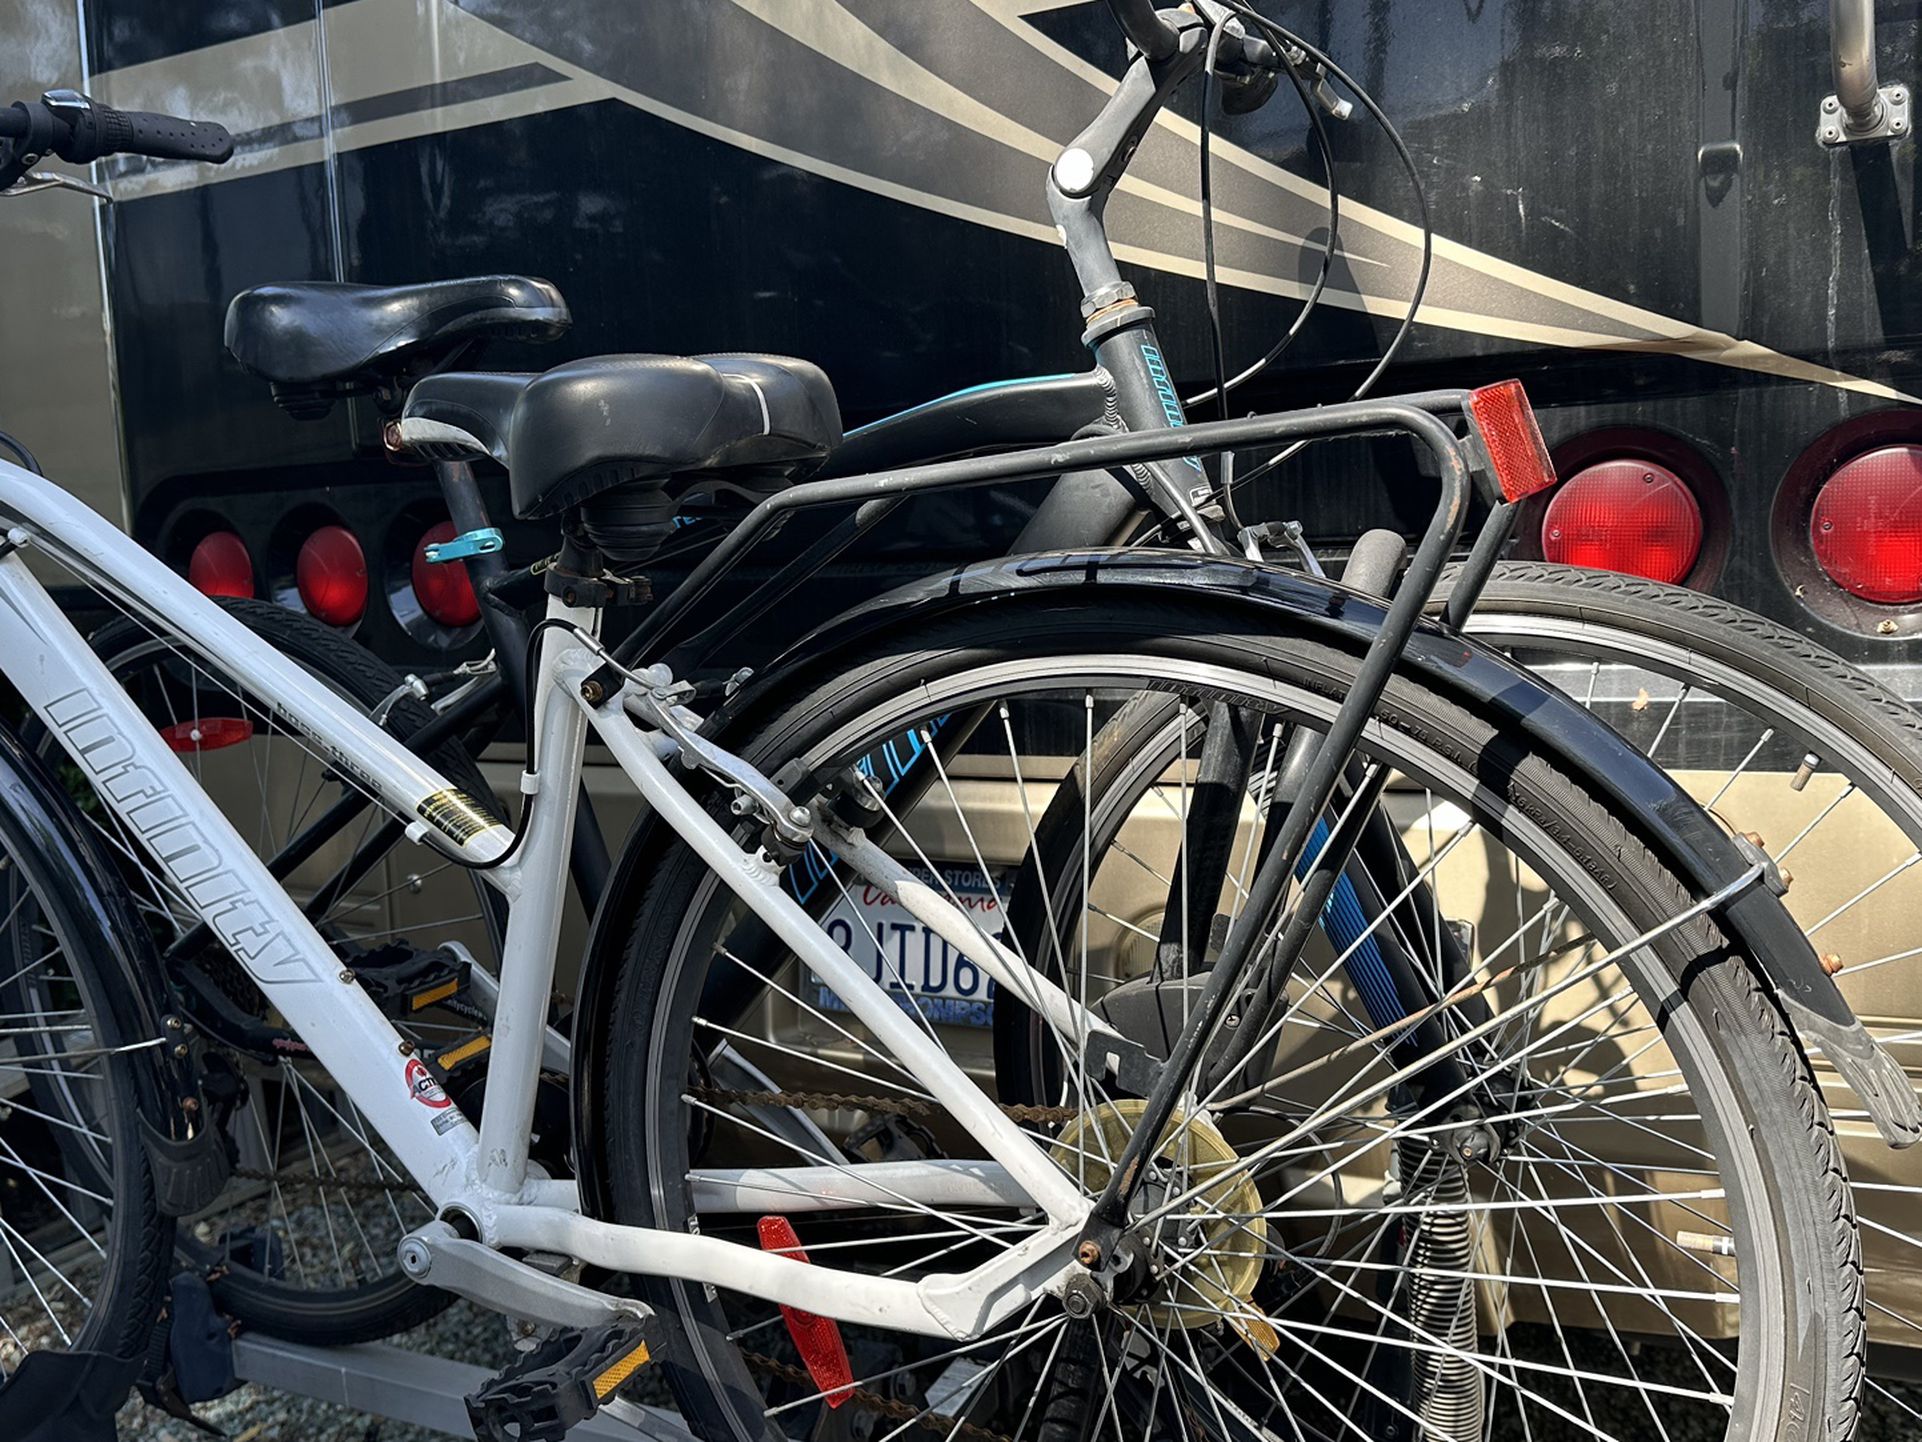 Thule Locking Bike Rack With Two Bikes, Men/Women’s Bicycles